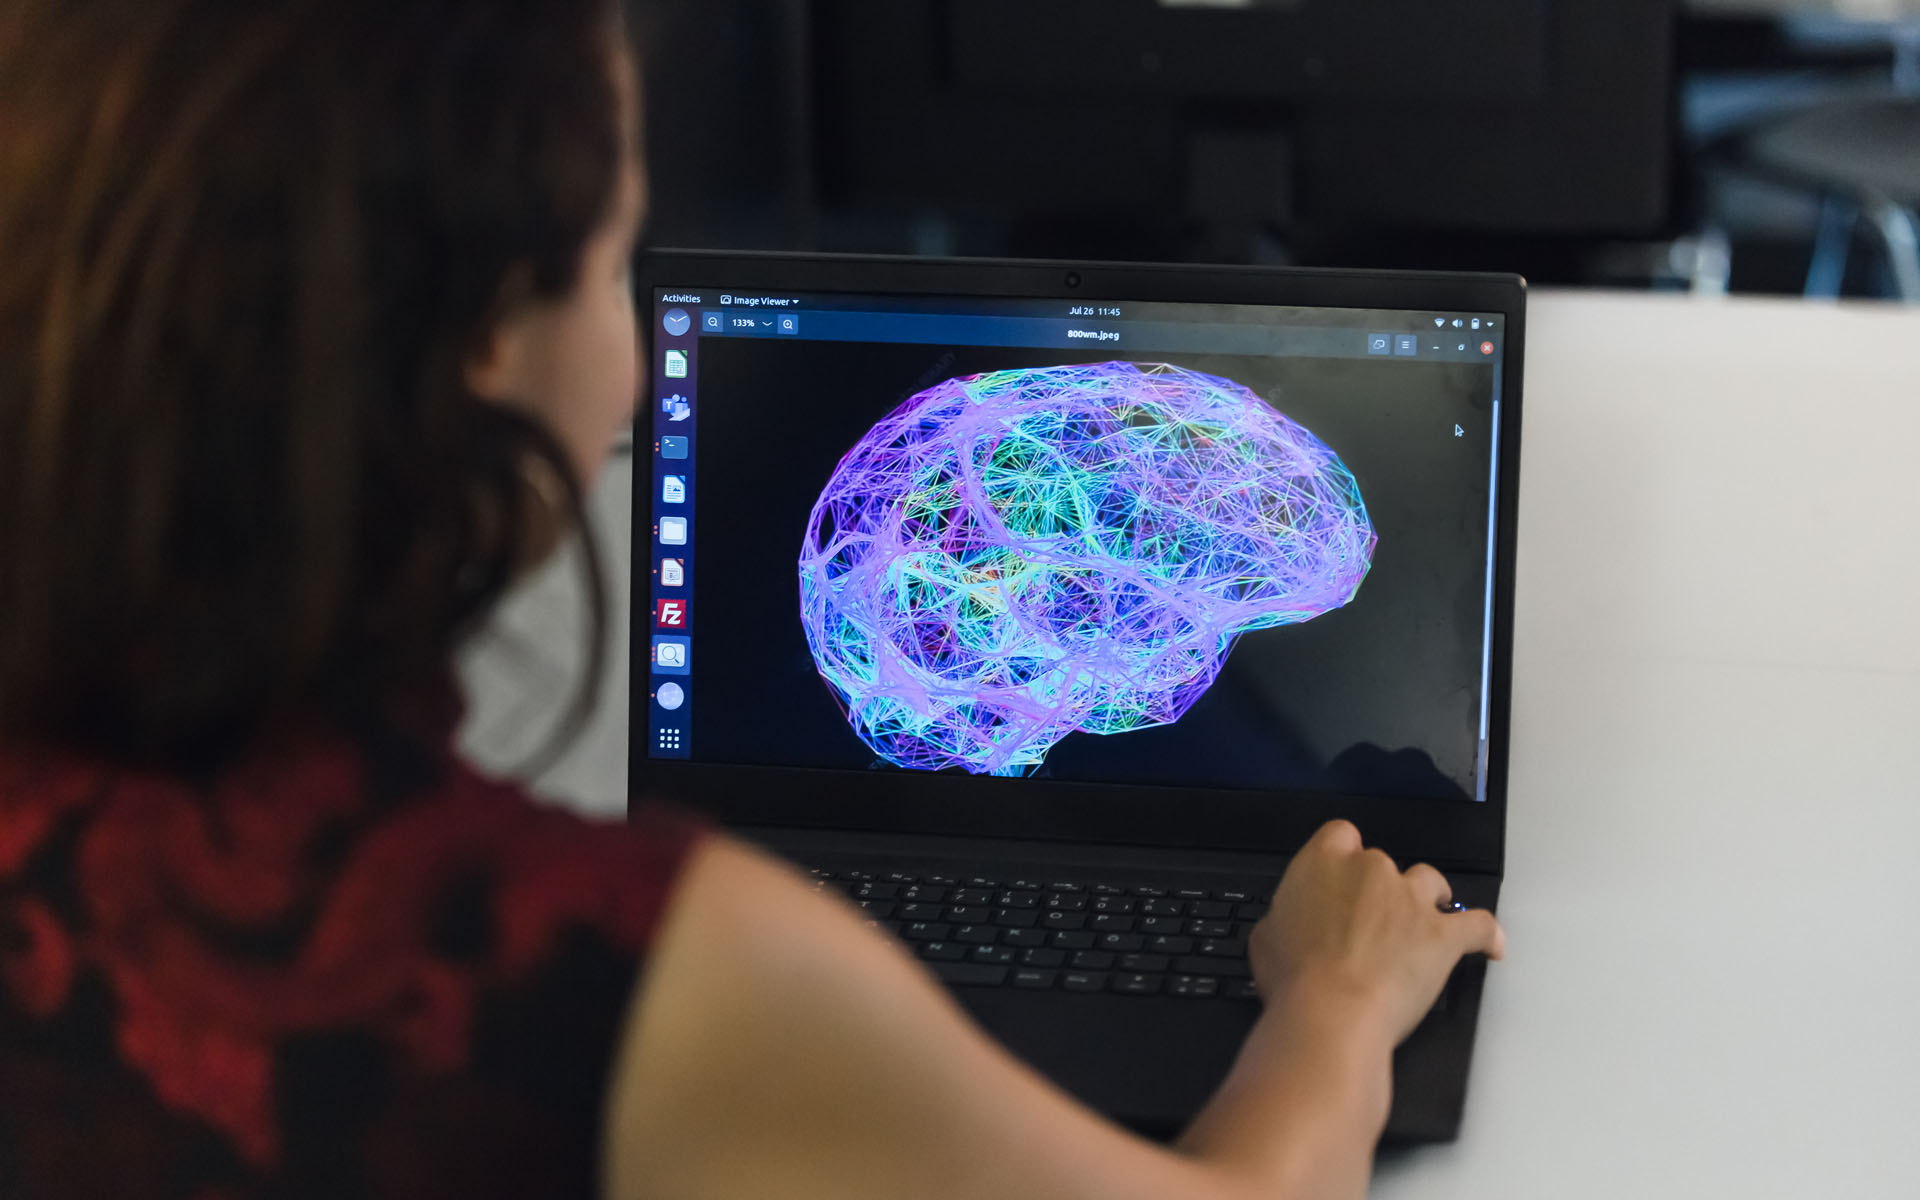 Doktorandin bei der Betrachtung der digitalen Abbildung eines Gehirns am Bildschirm.